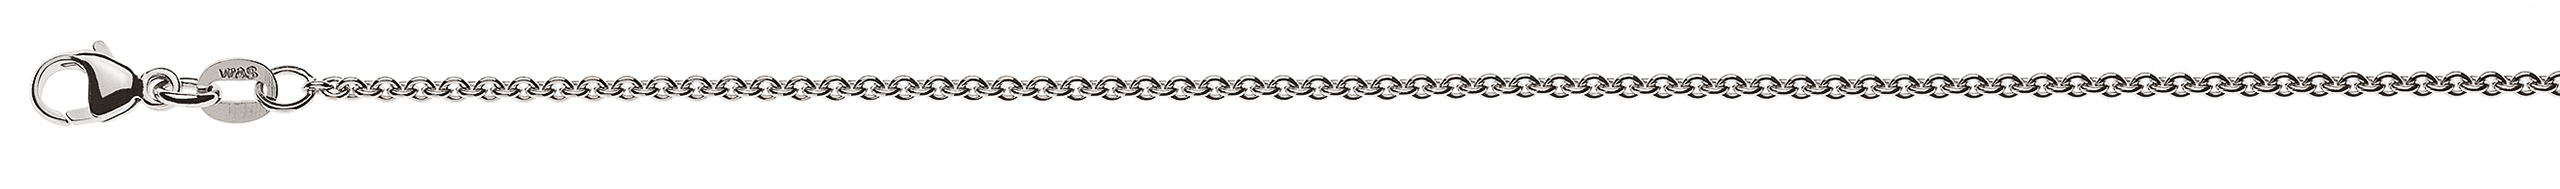 AURONOS Style Necklace White Gold 9K Round Anchor 40cm 1.7mm